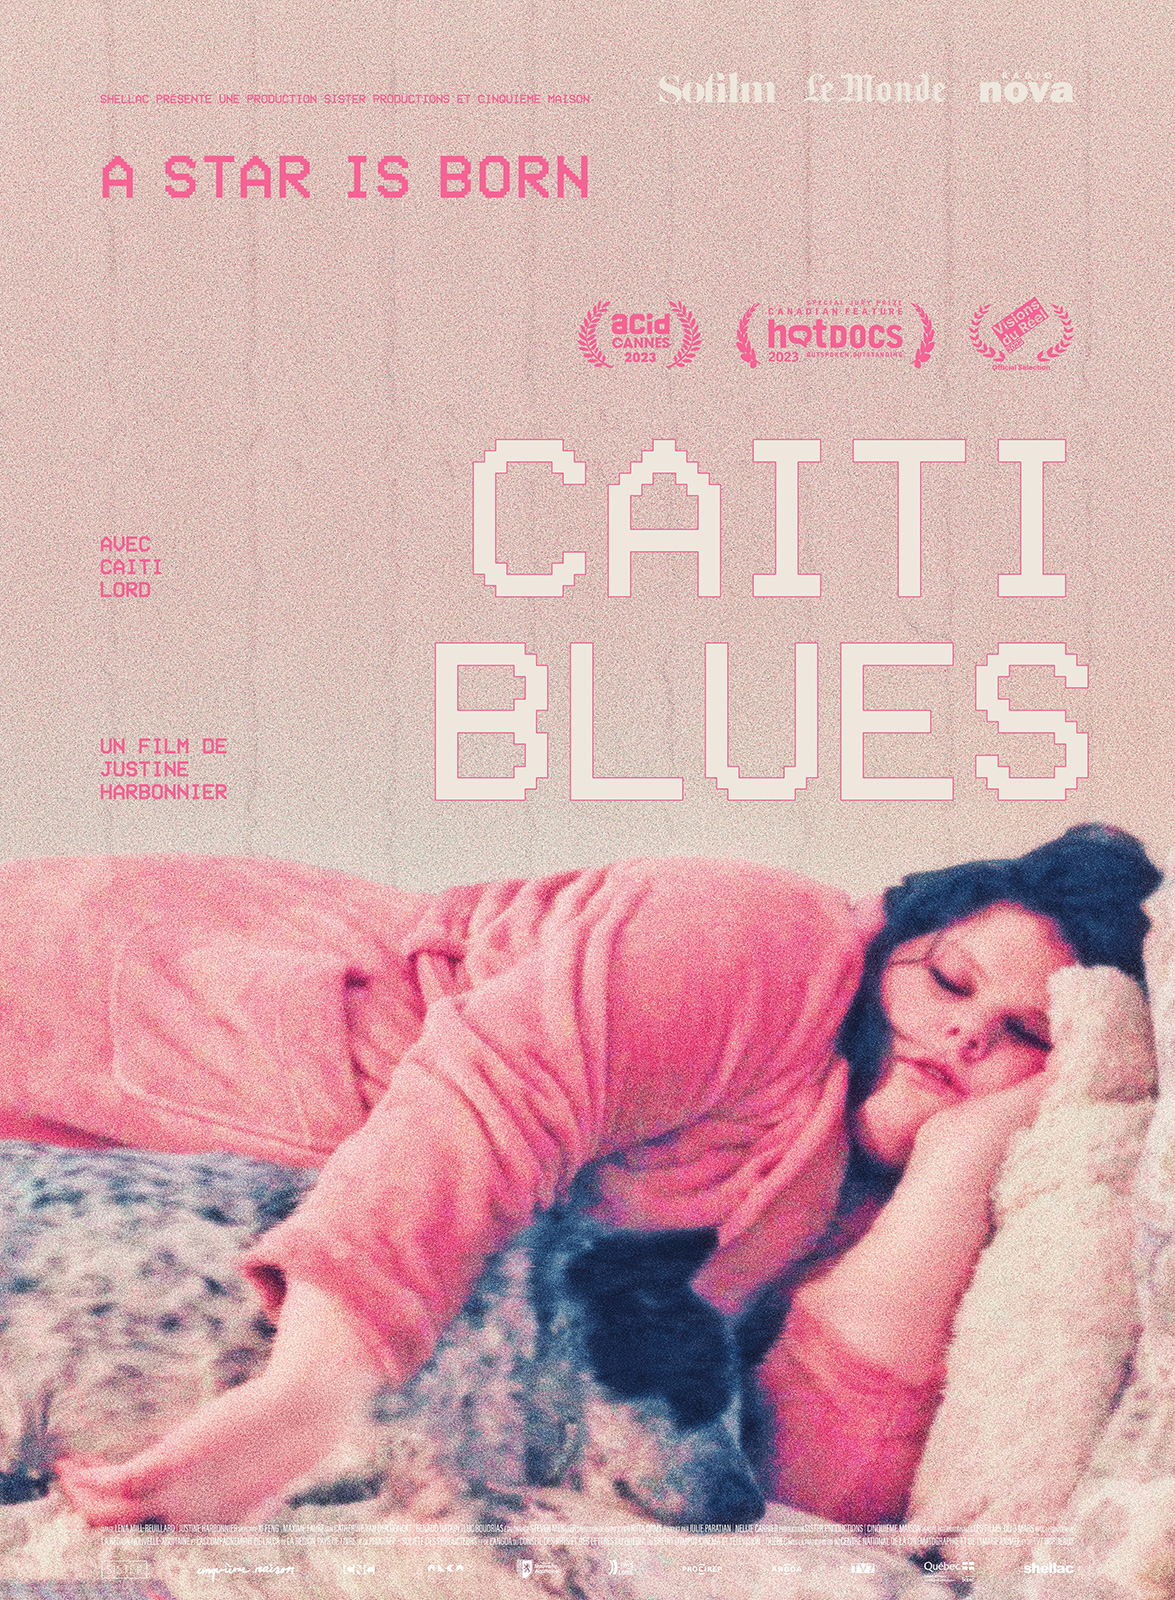 Caiti Blues